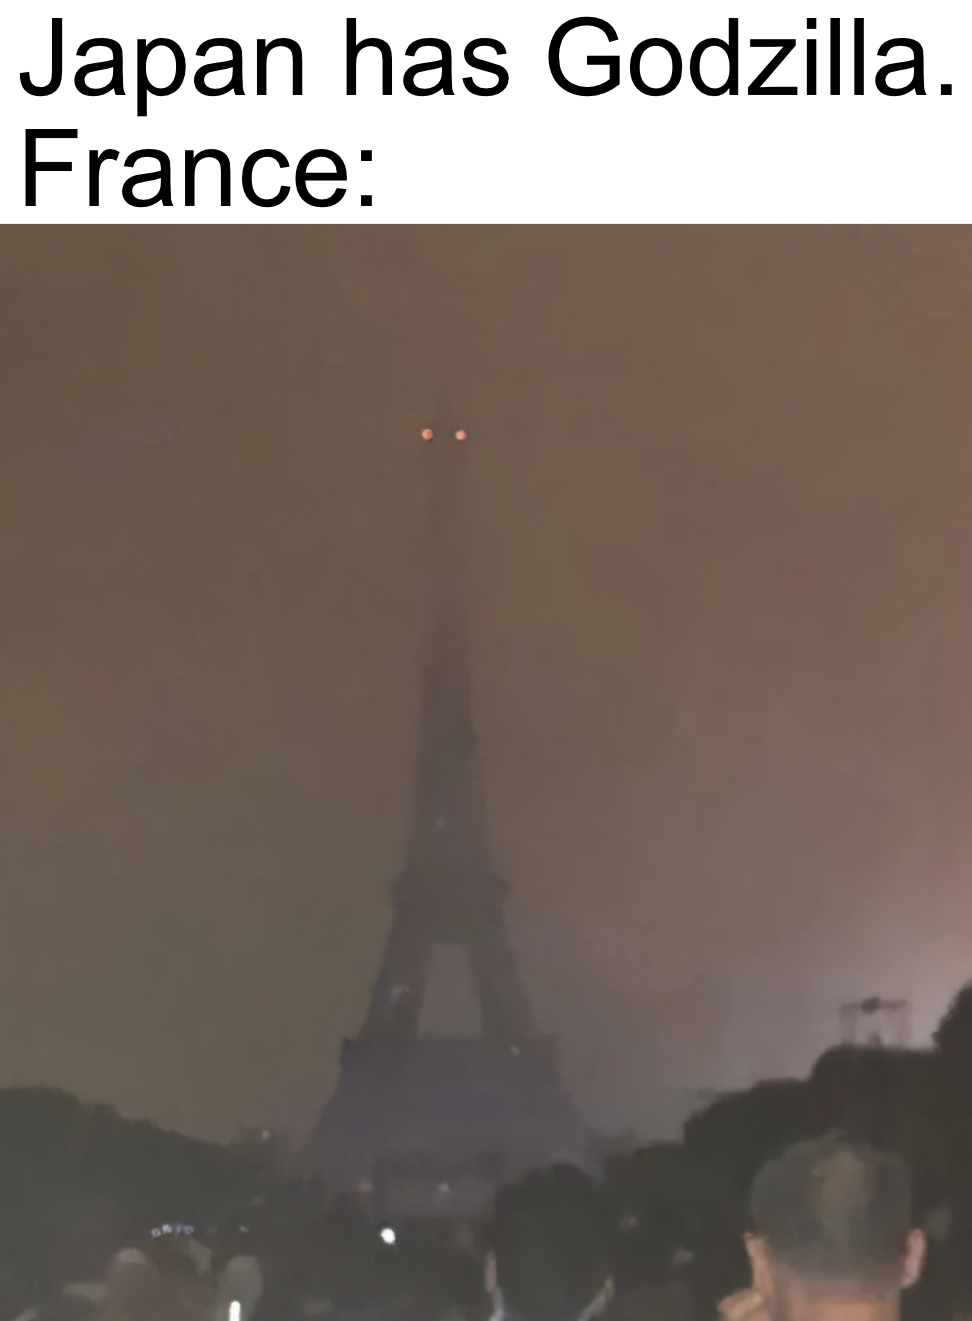 dank memes - funny memes - atmosphere - Japan has Godzilla. France